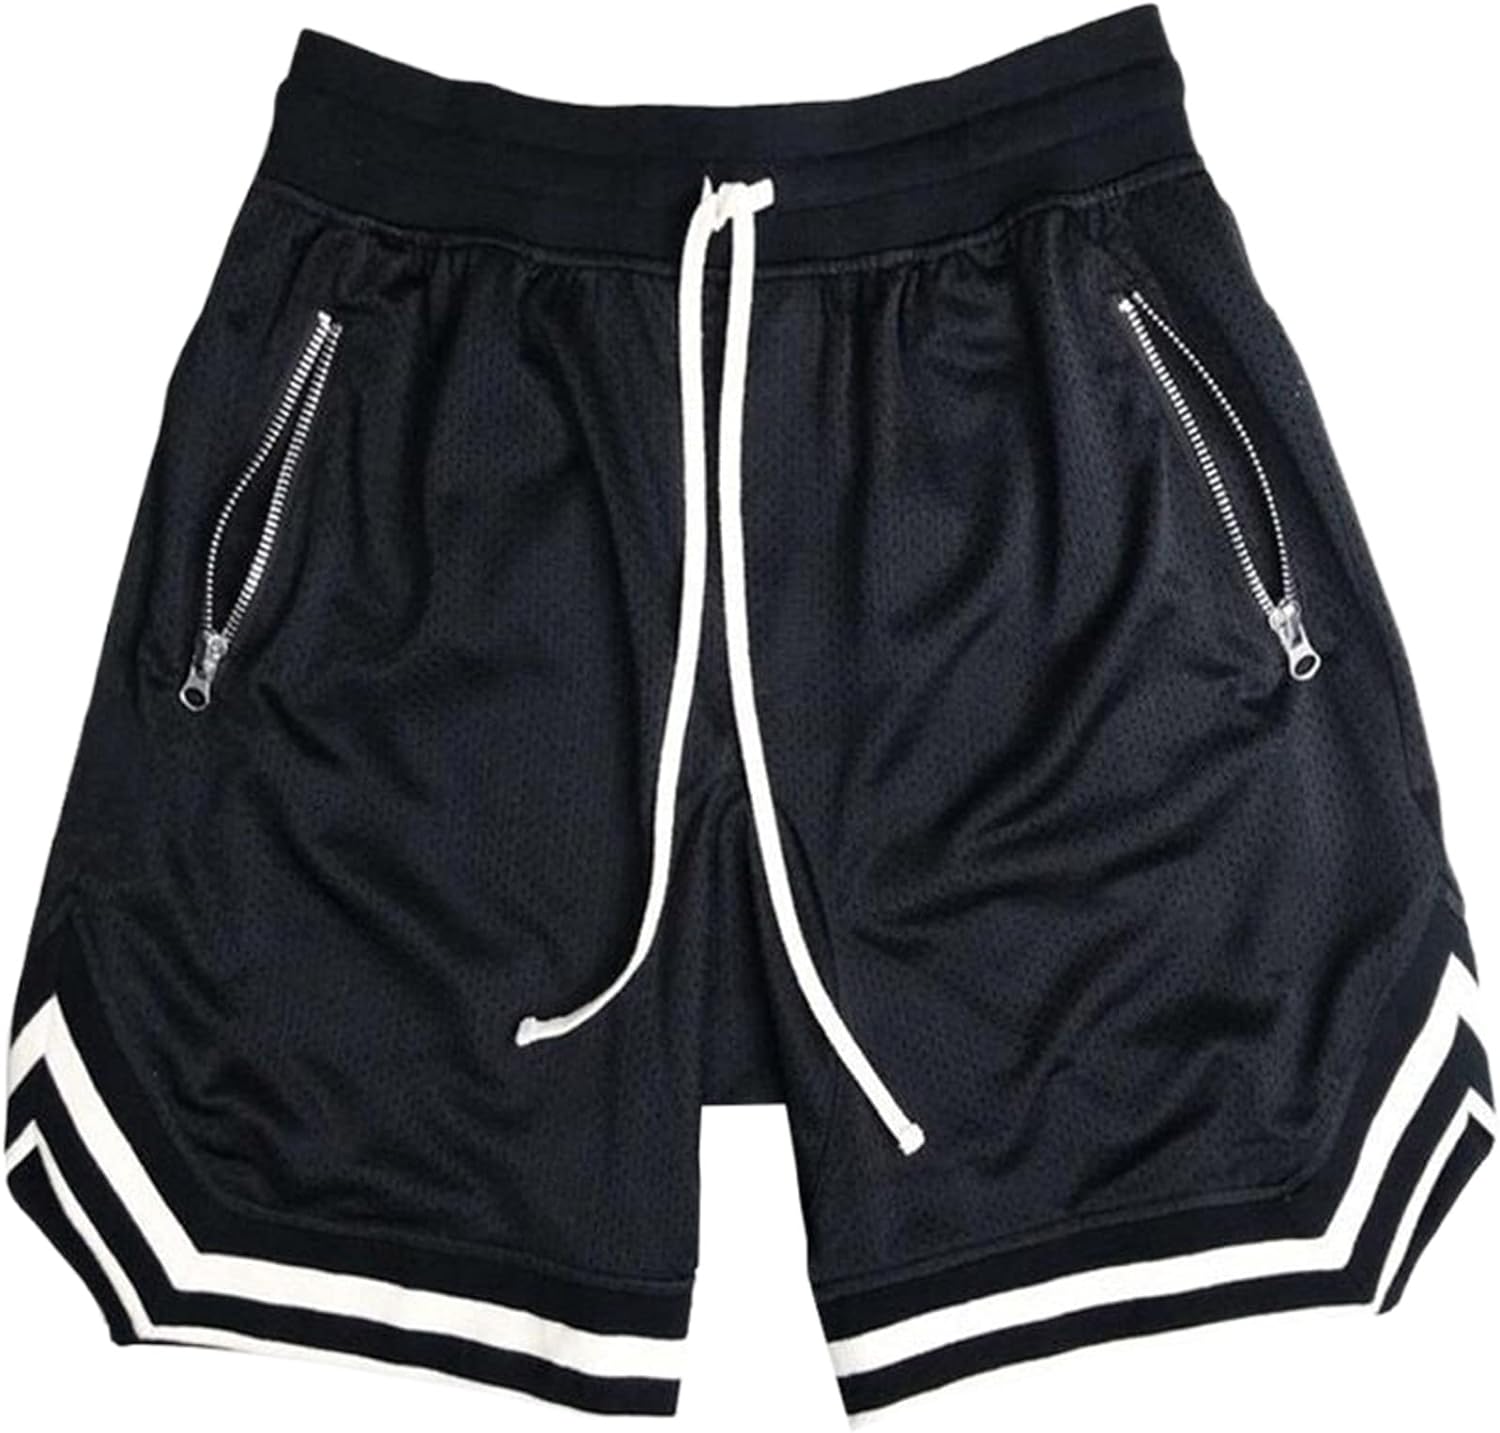 Dress Cici Basketball Shorts for Men, Quick Dry Football Shorts